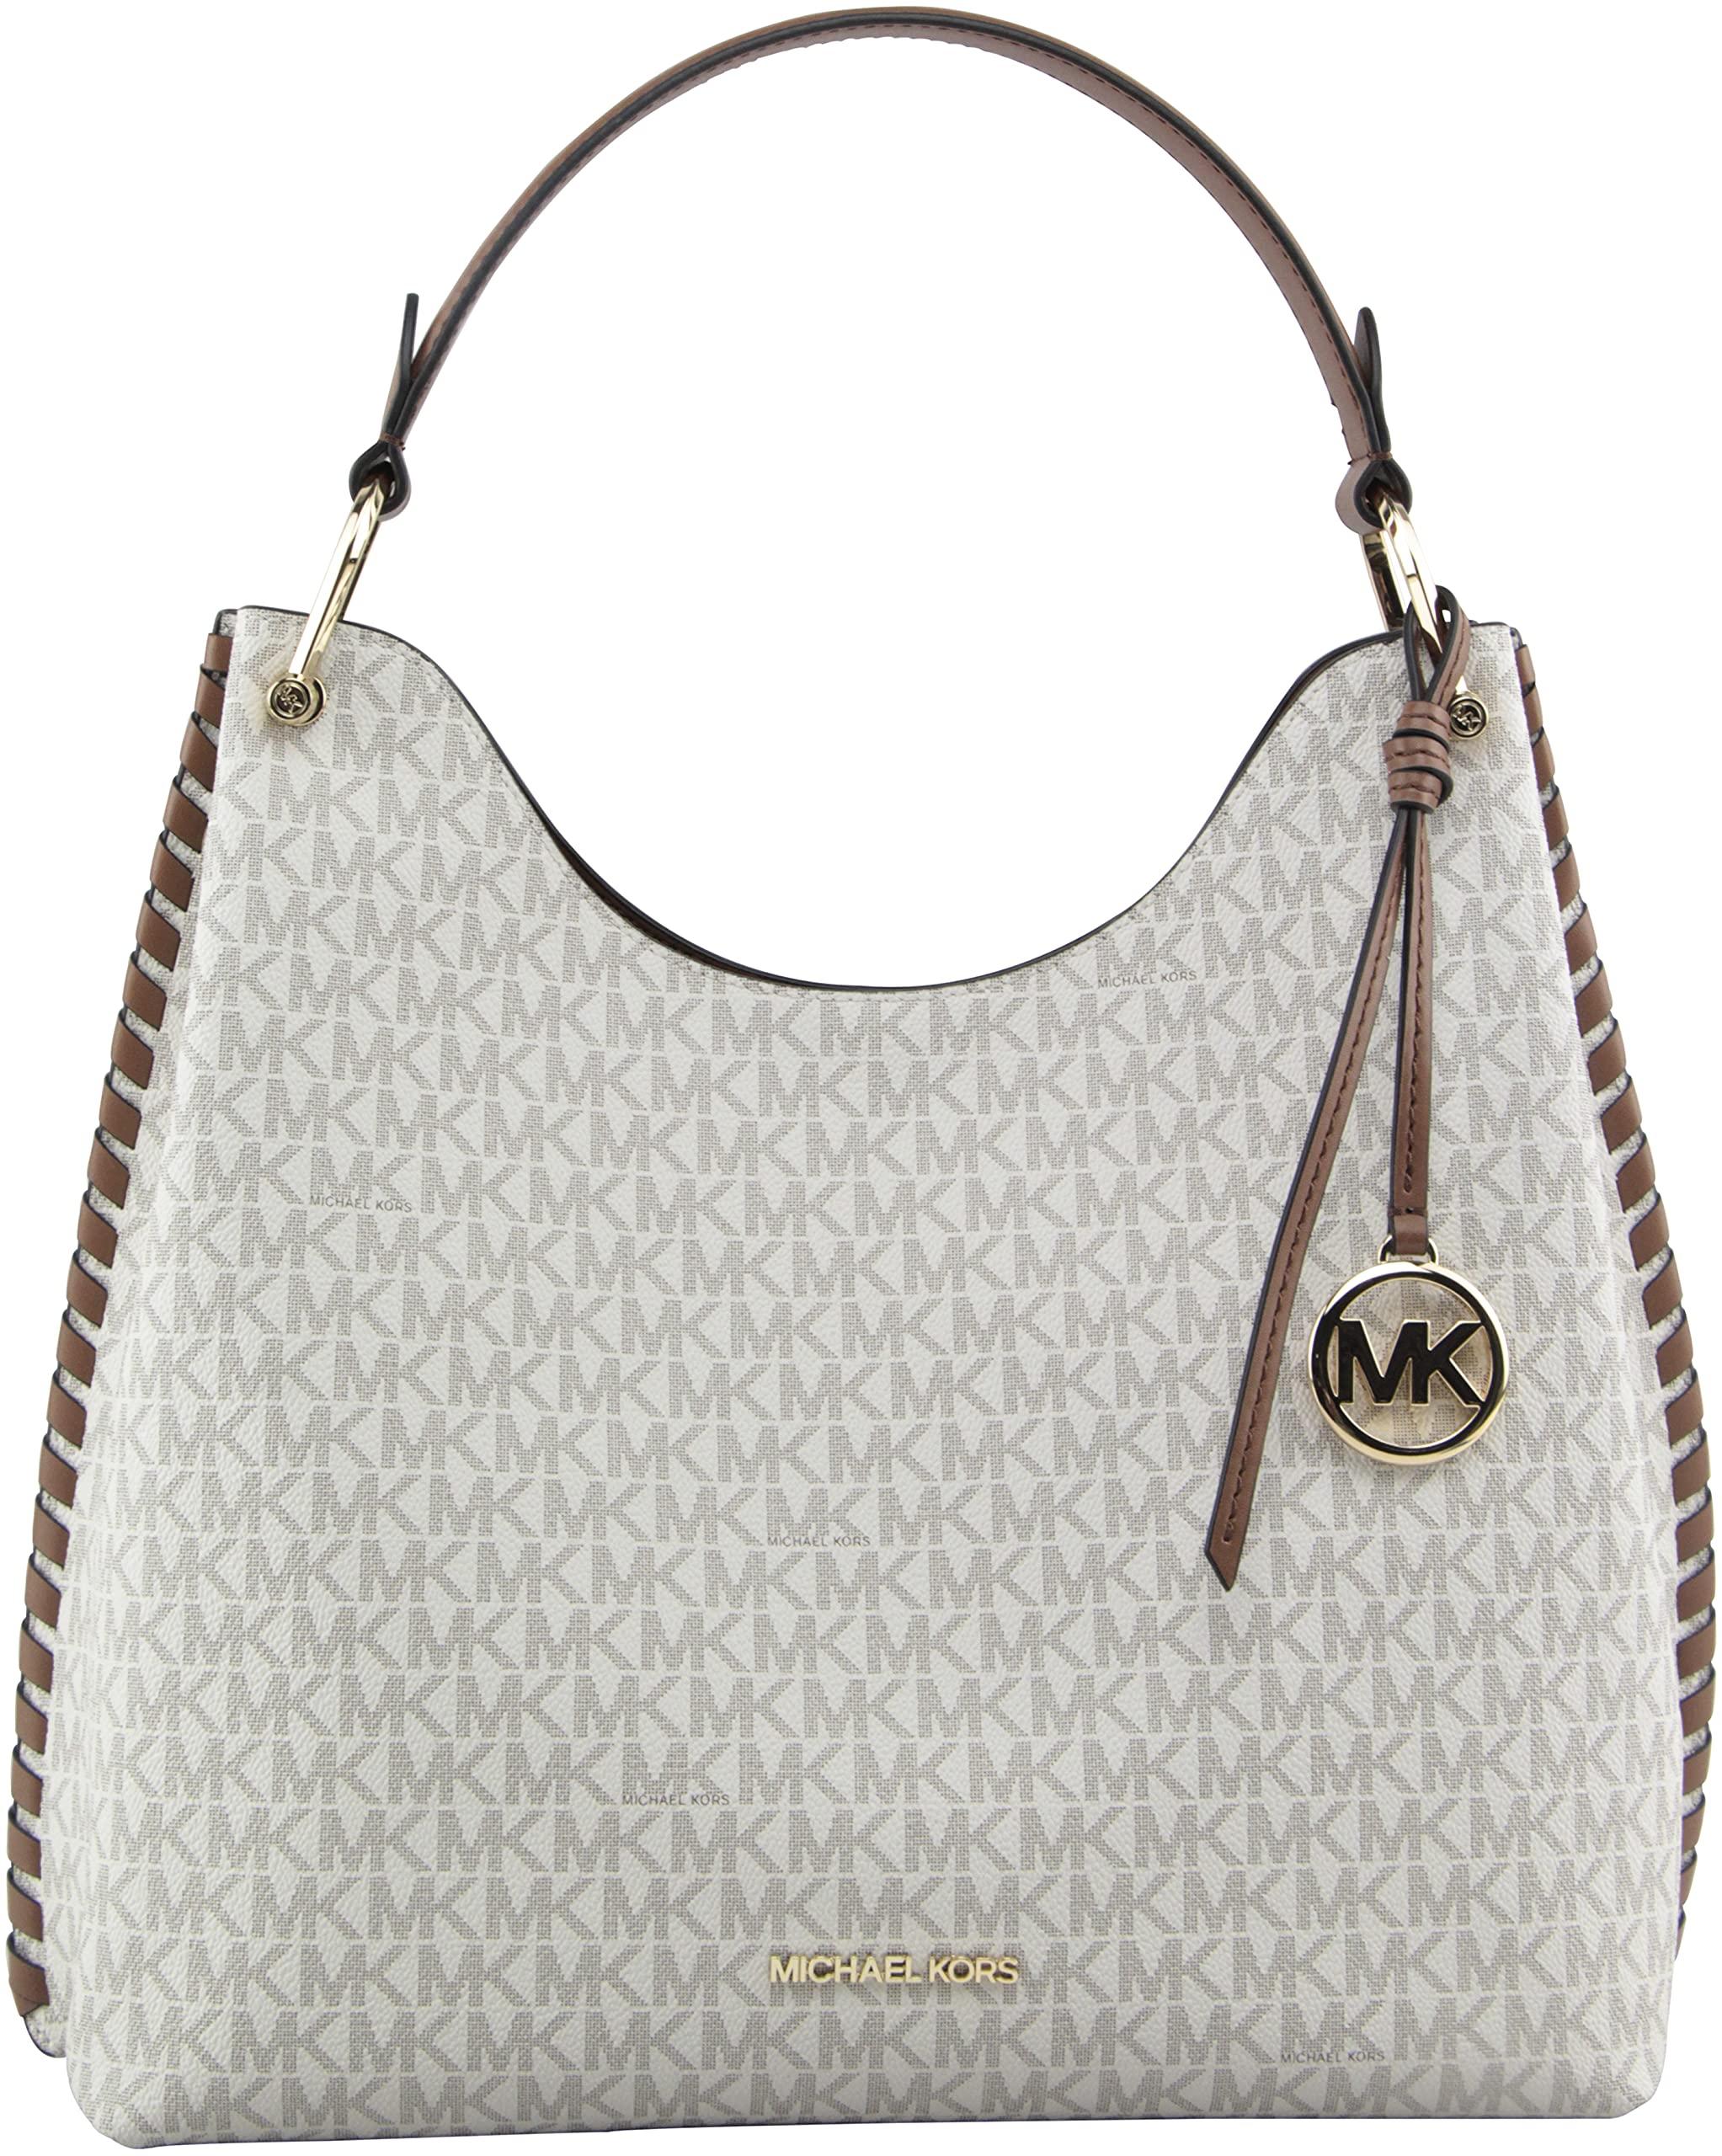 Michael Kors Sienna Pebbled Leather Convertible Shoulder Bag Handbags  Amazoncom